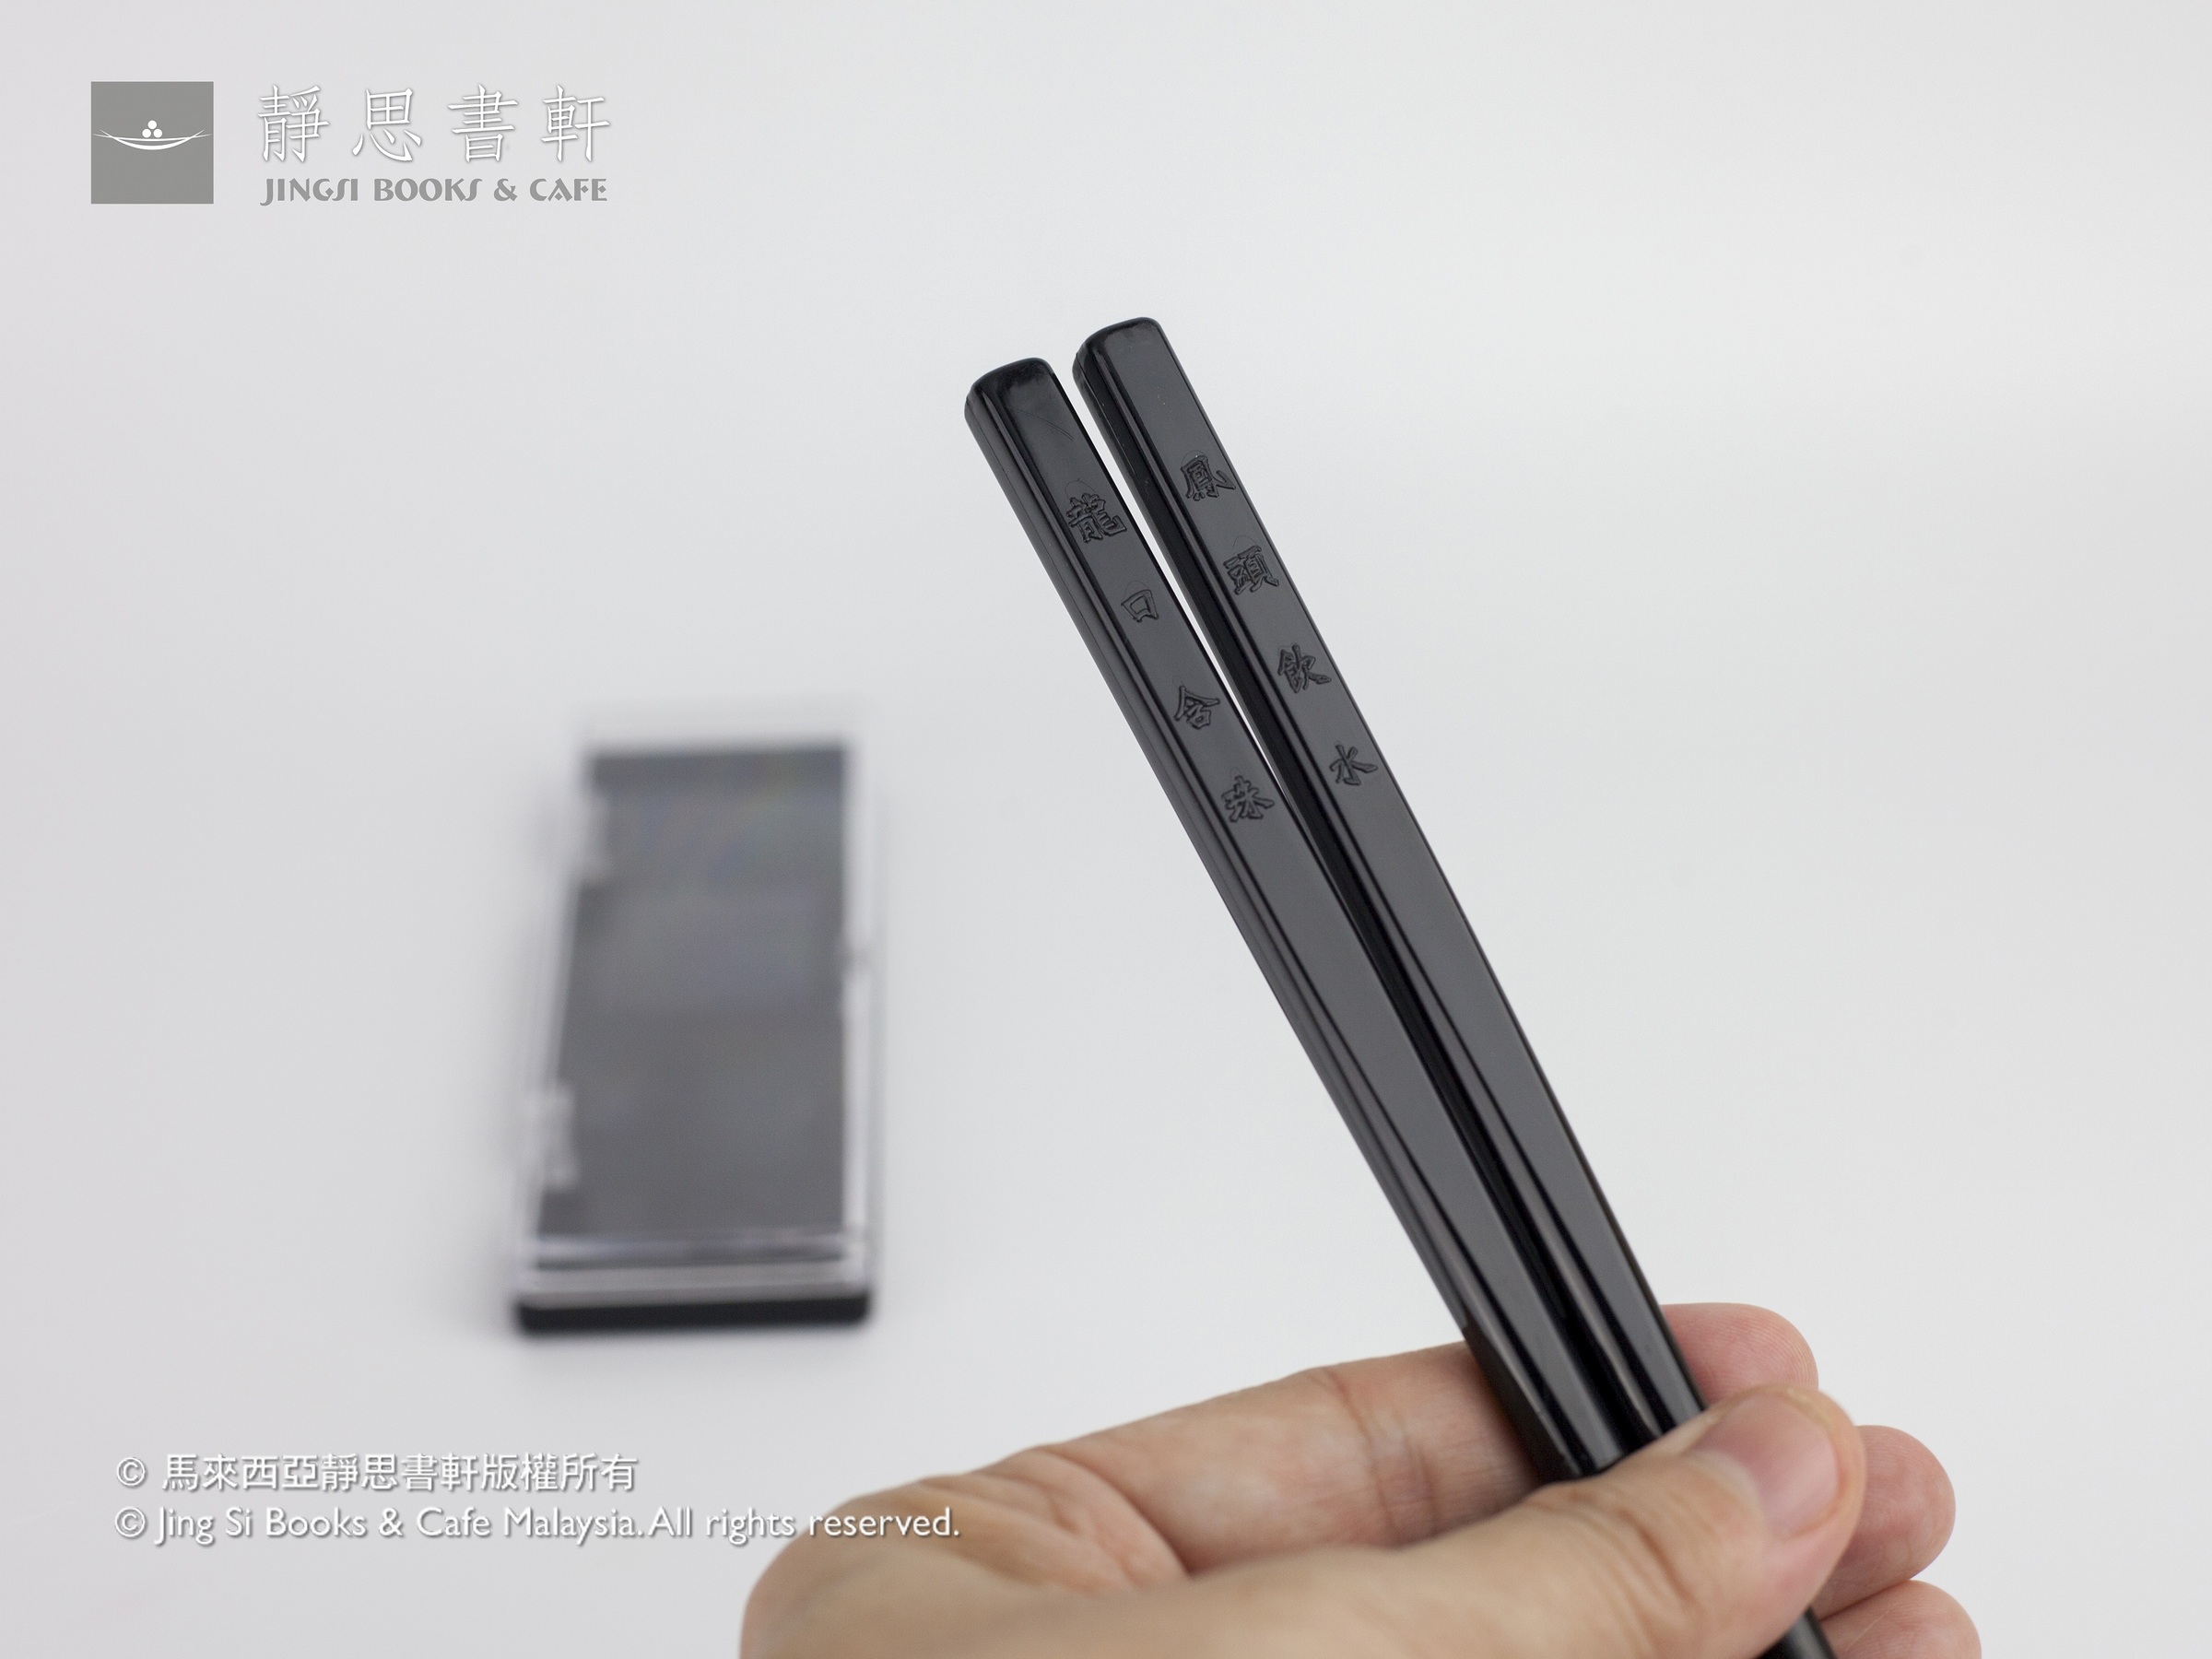 Stainless Steel Retractable Chopsticks 不鏽鋼伸縮筷 – Jing Si